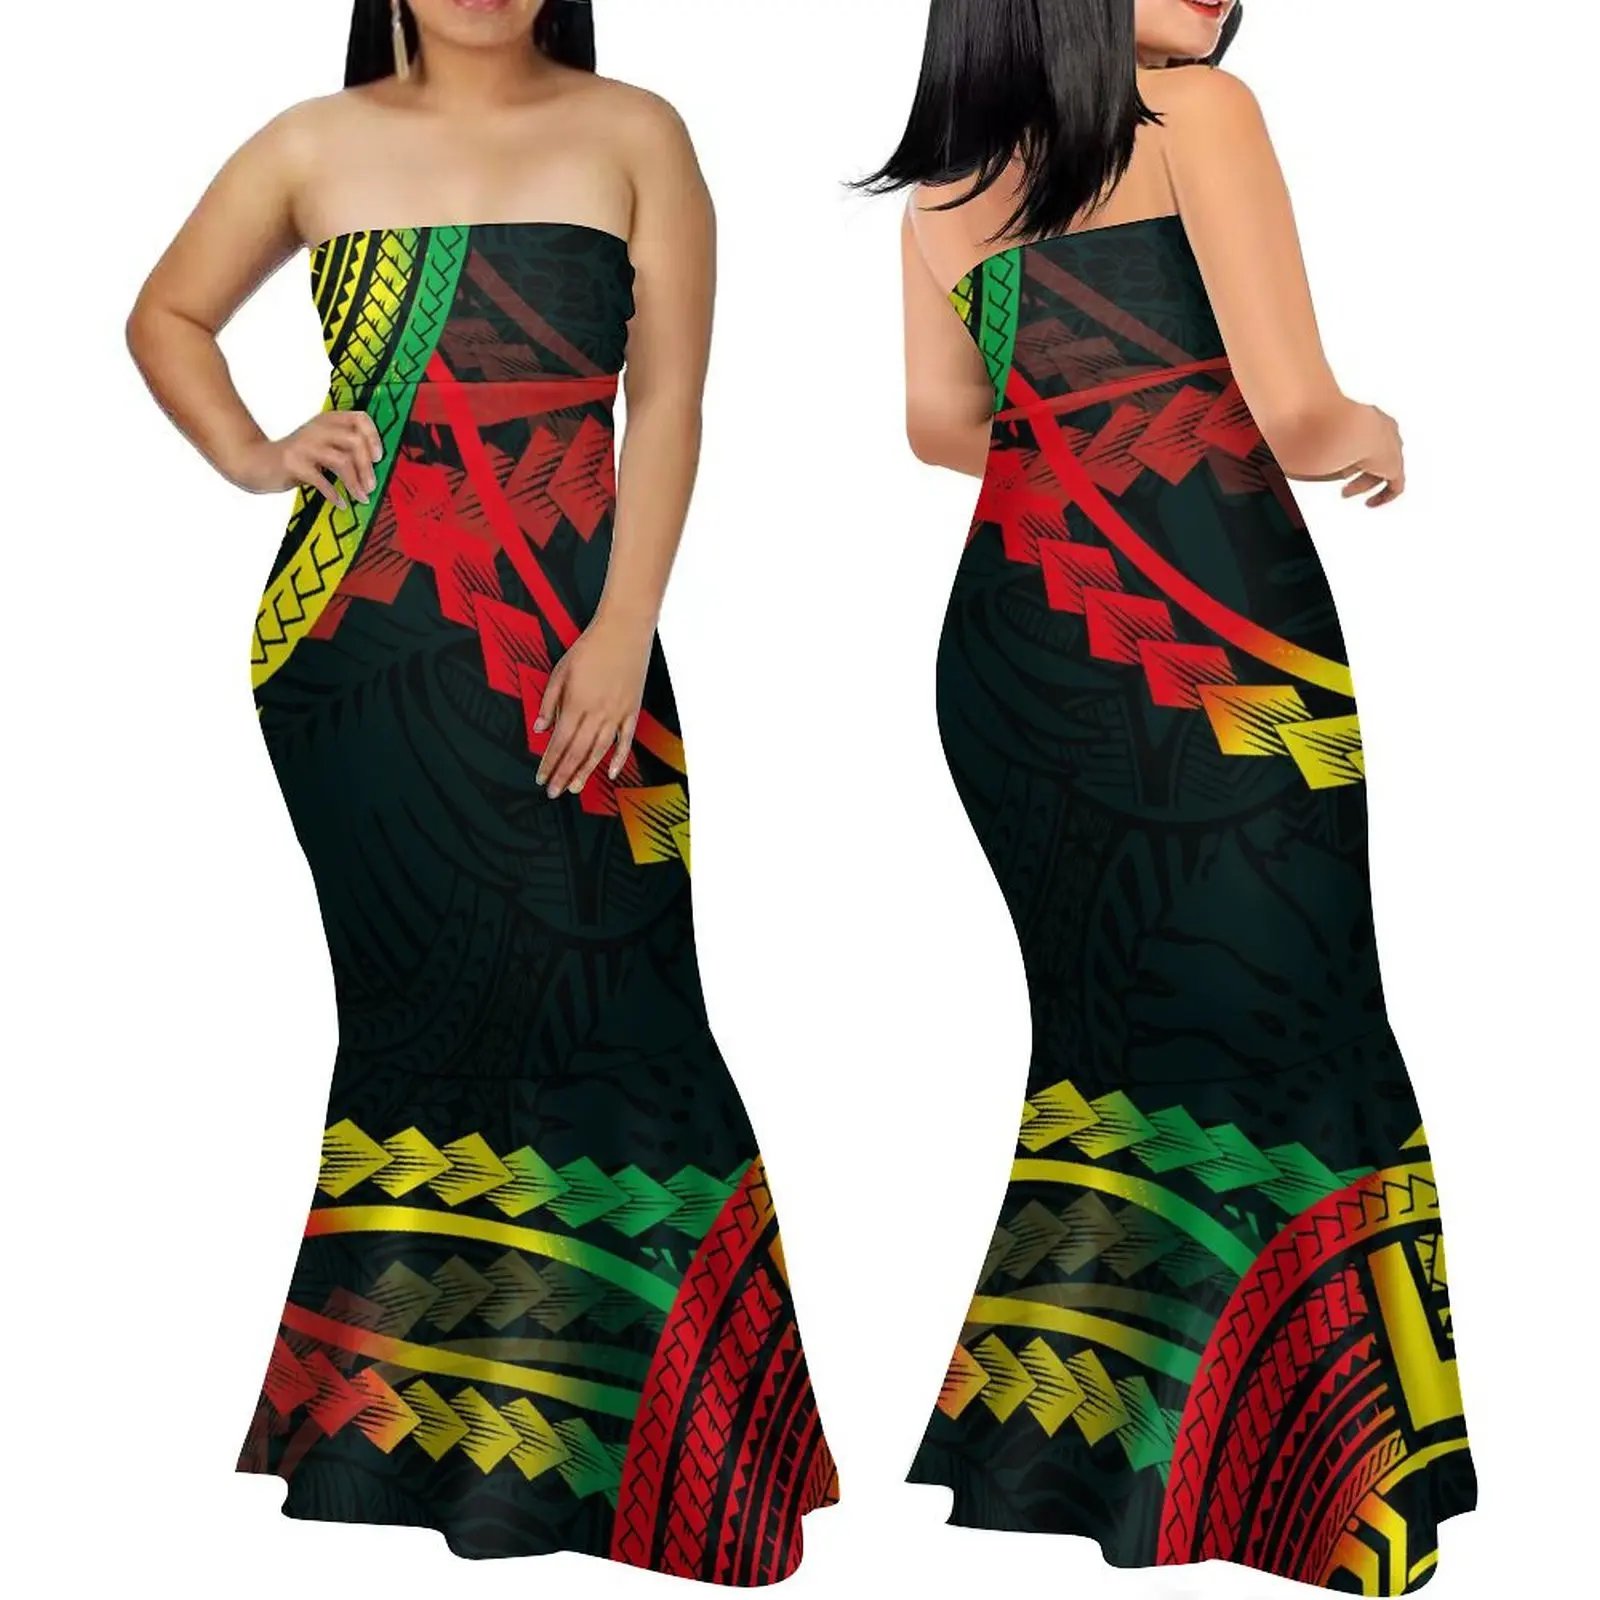 Polynesian tribal temperament slim-fit off-the-shoulder dress delicate striped Hawaiian fashion high-quality short-sleeved dress